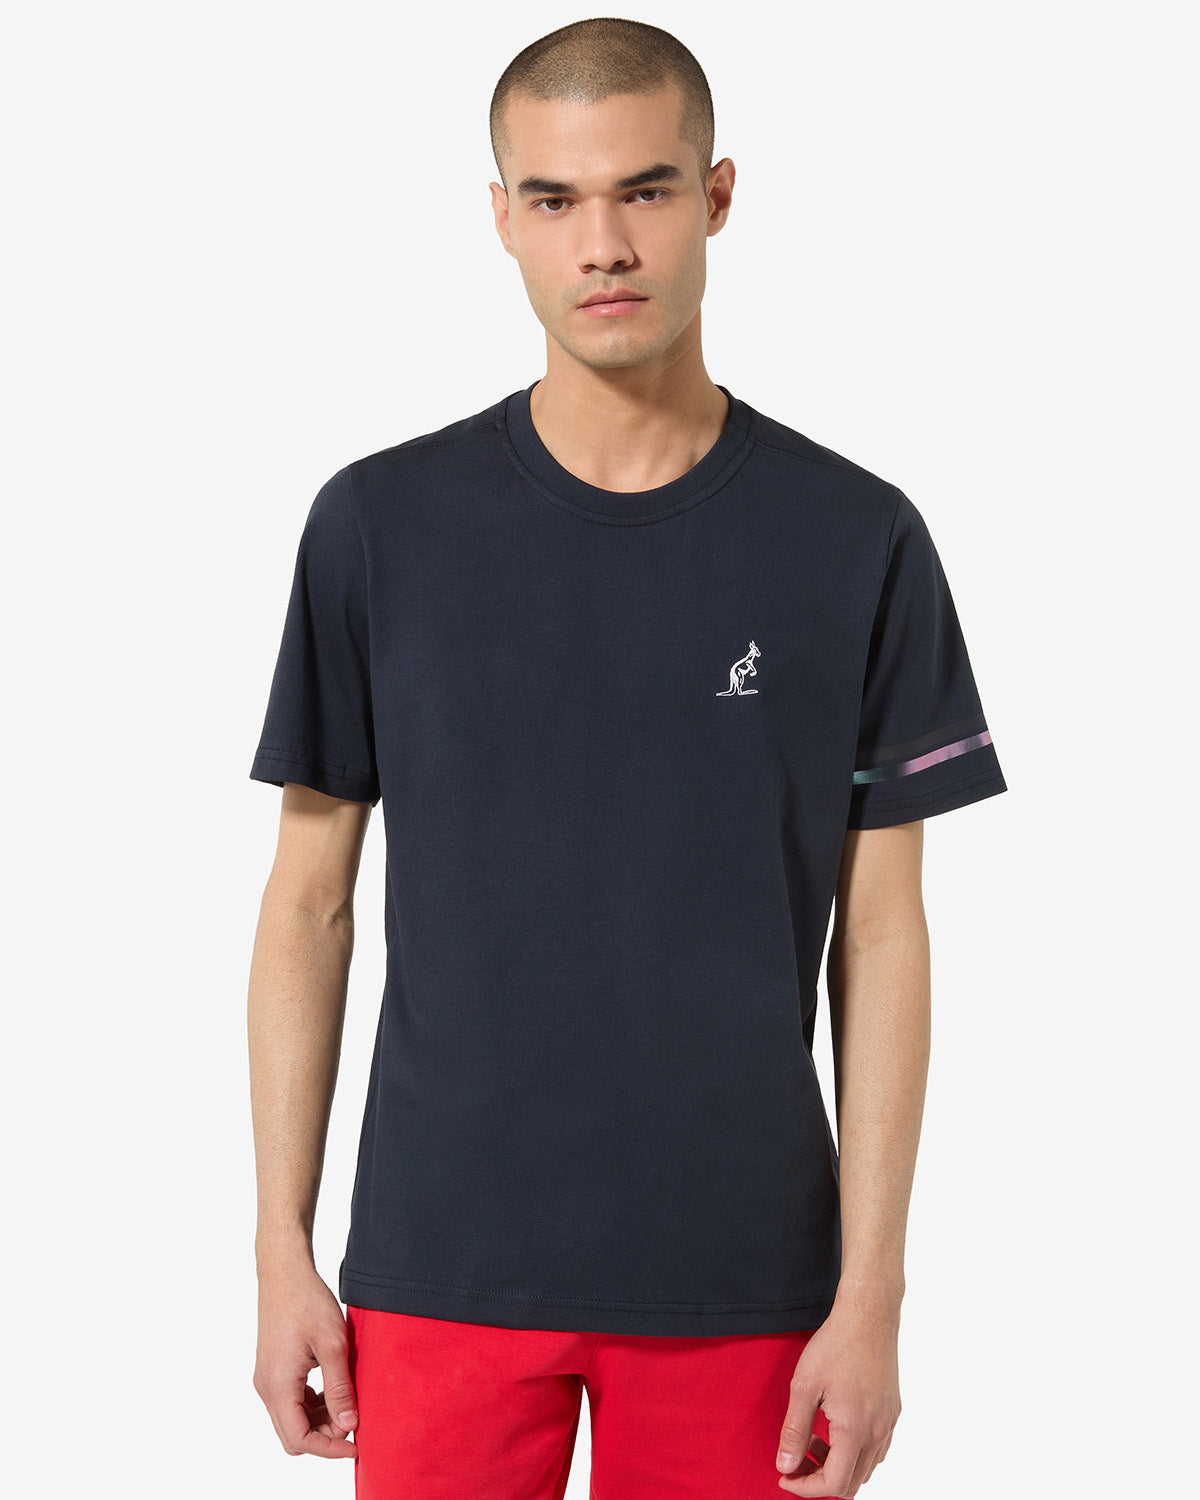 Club T-shirt: Australian Sportswear